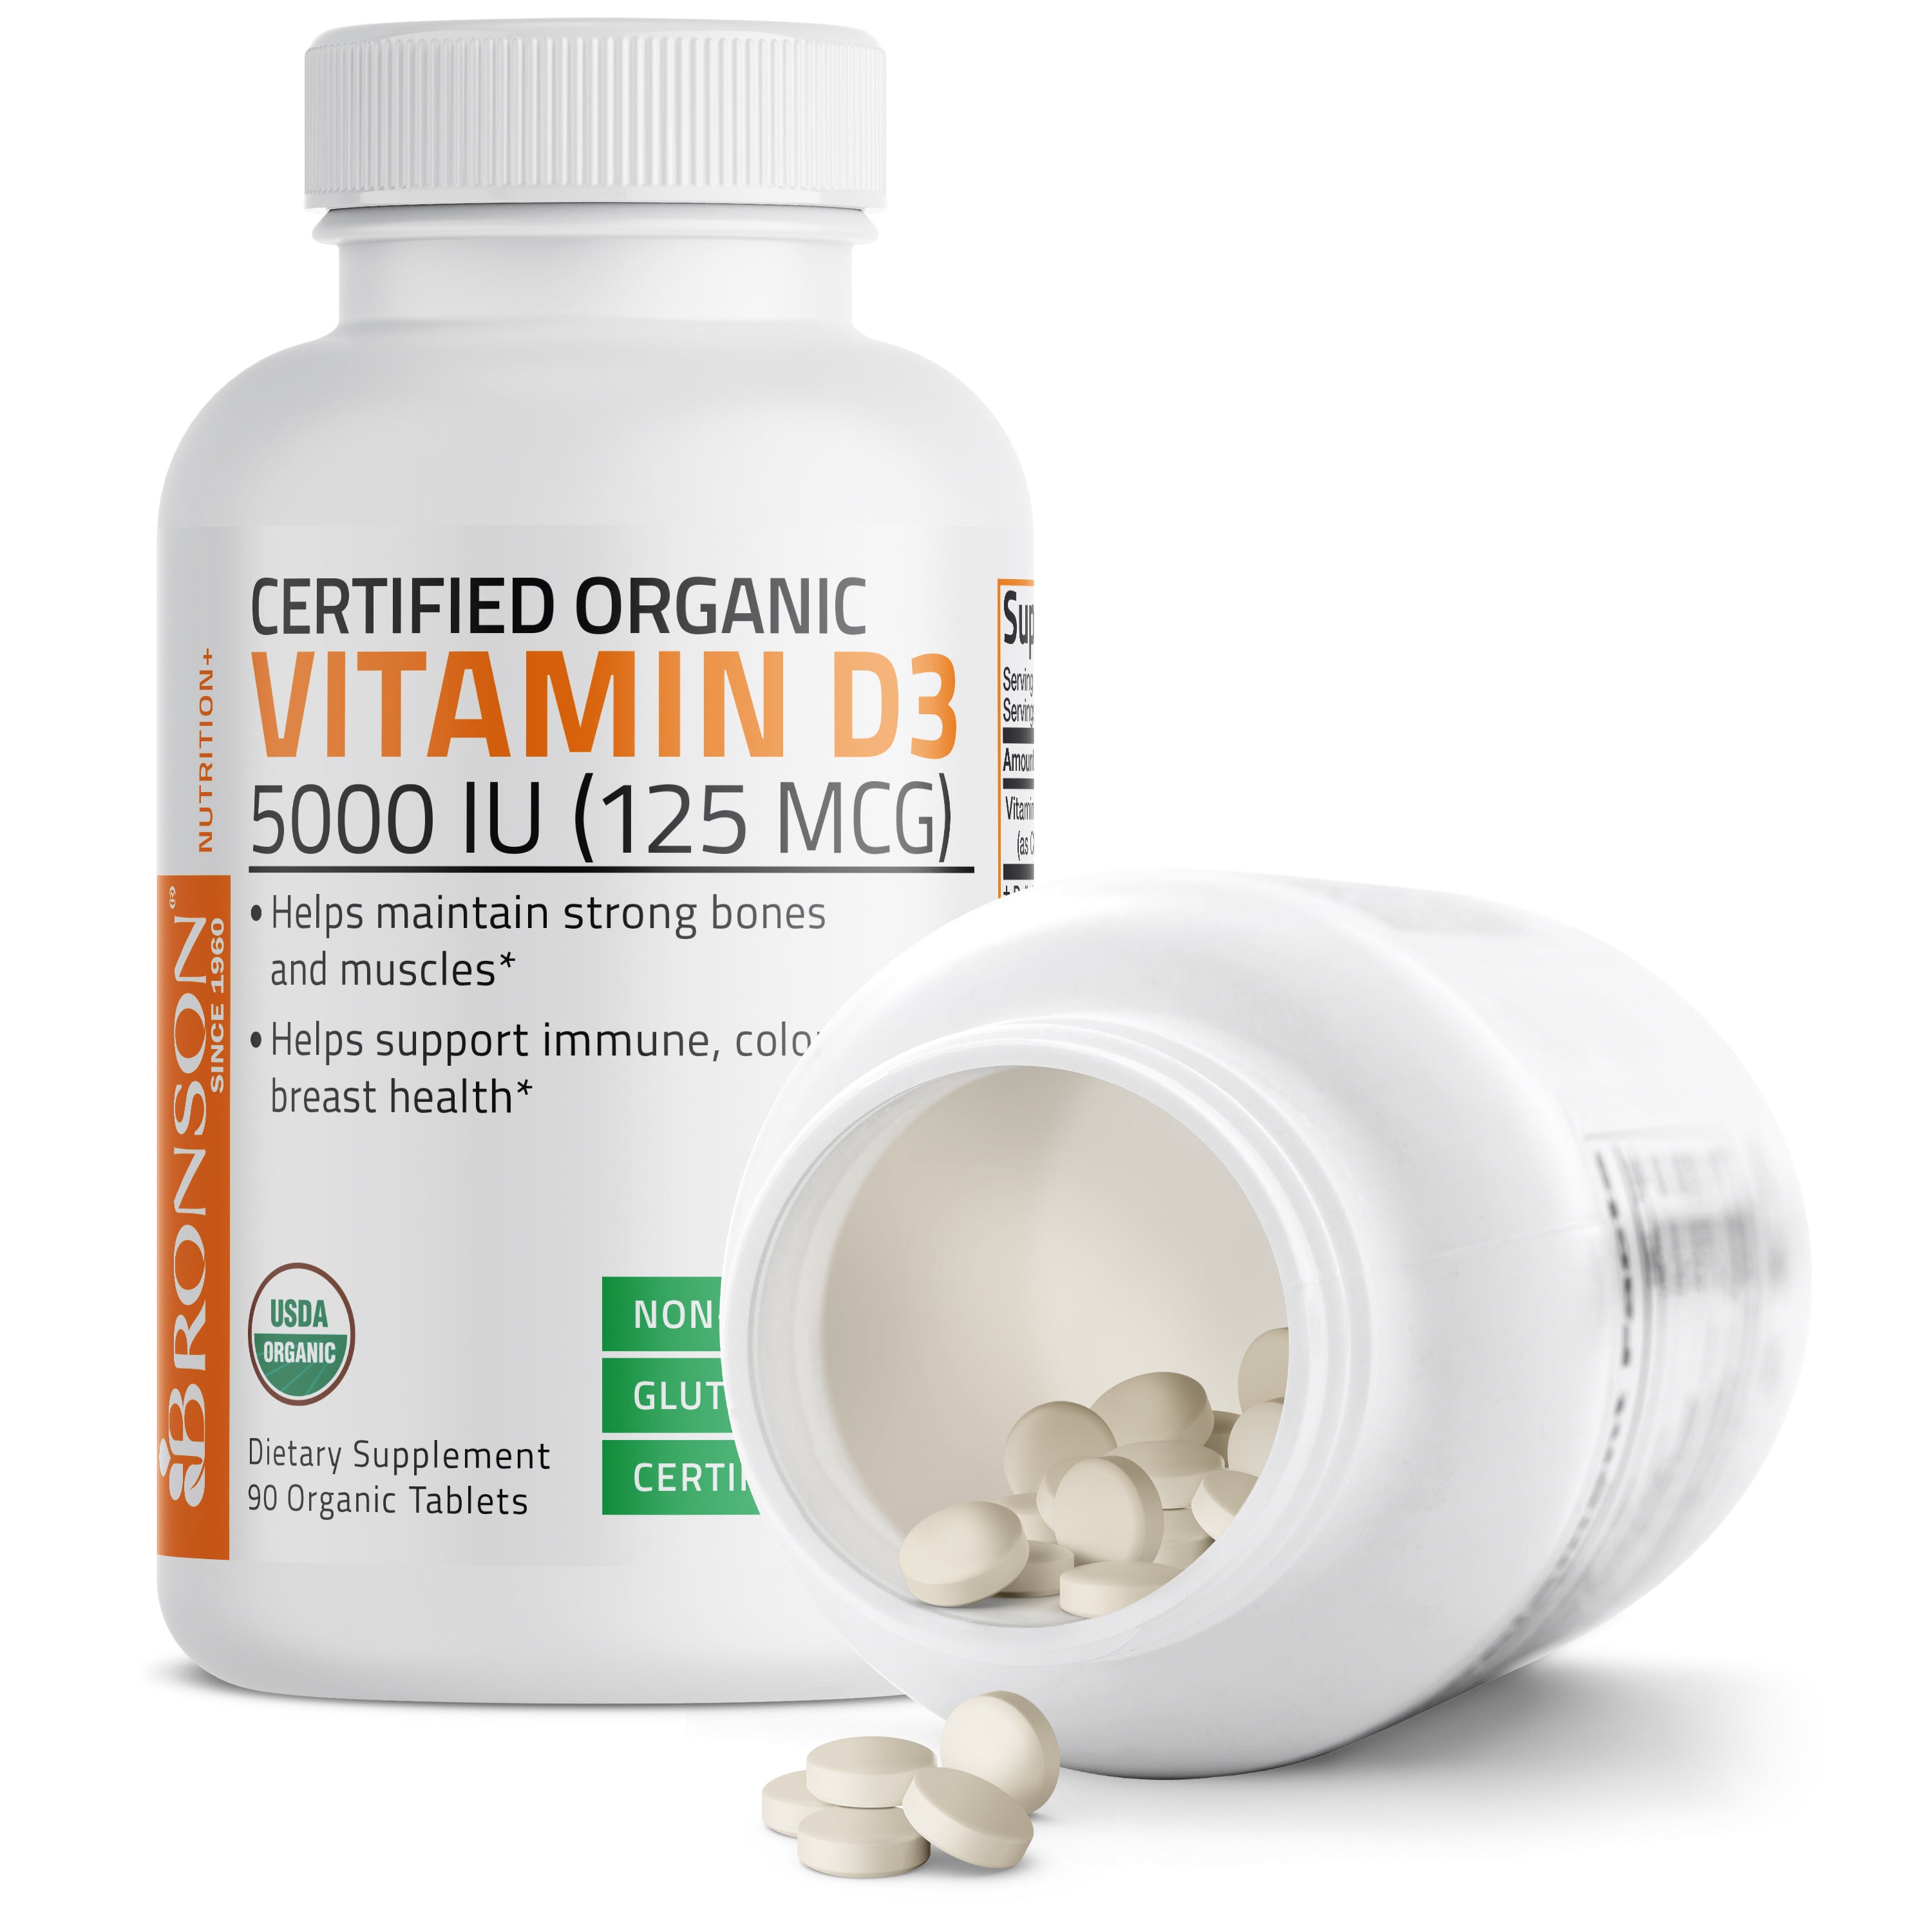 Vitamin D3 USDA Certified Organic - 5,000 IU view 12 of 6